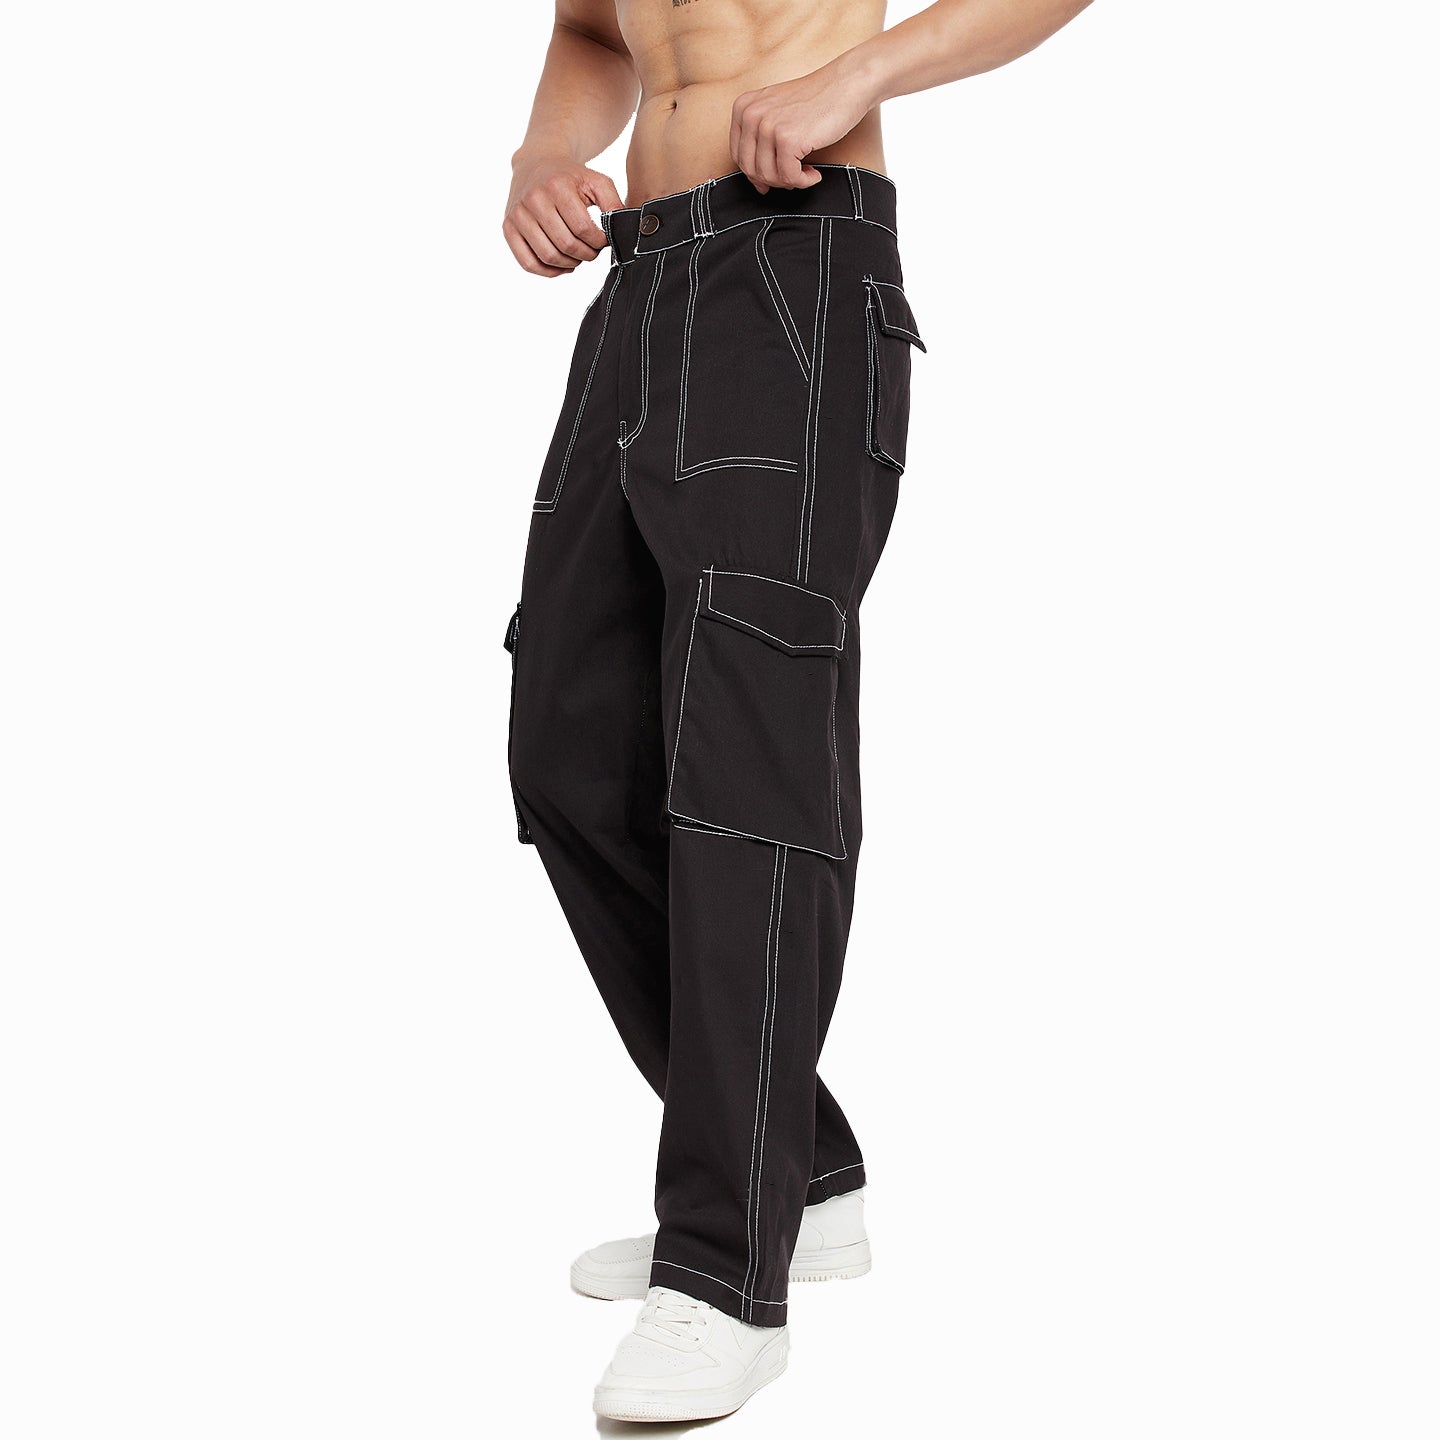 Buy Black Trousers  Pants for Men by RED TAPE Online  Ajiocom